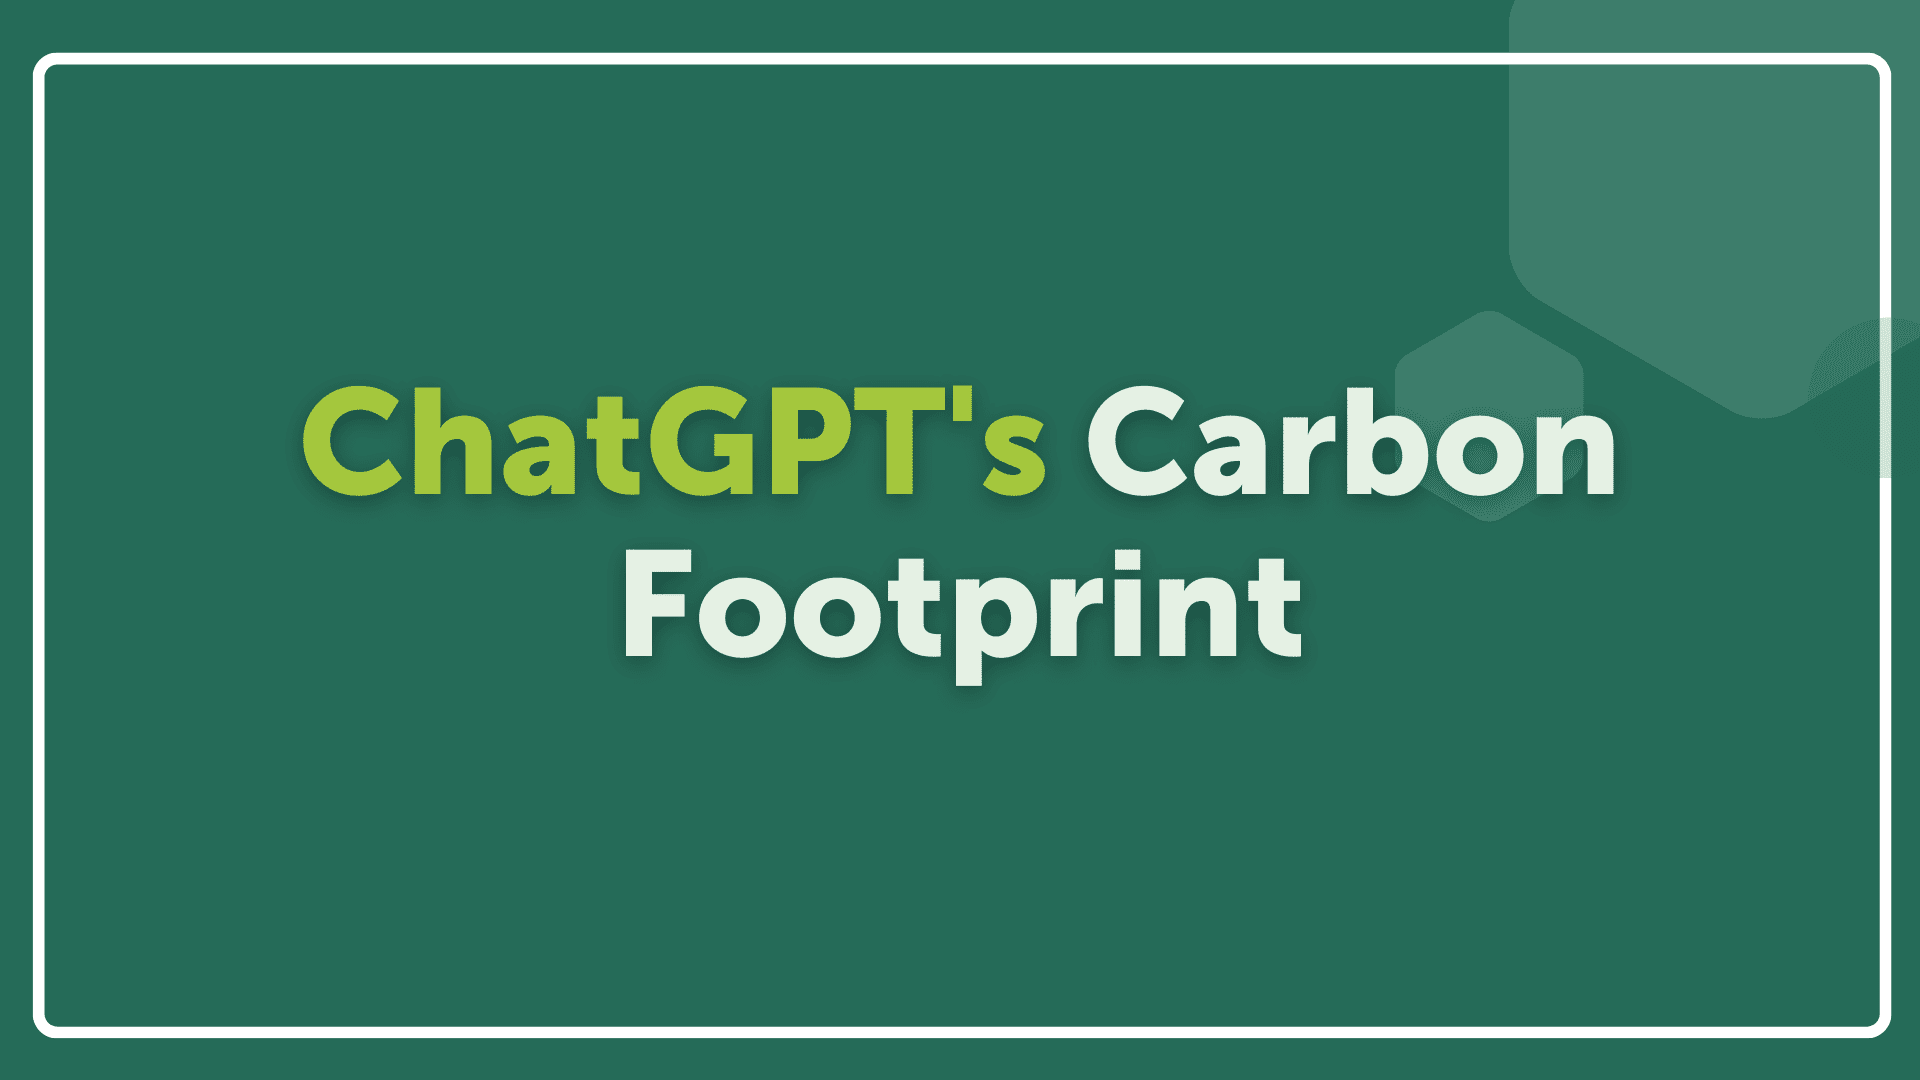 ChatGPT’s Carbon Footprint